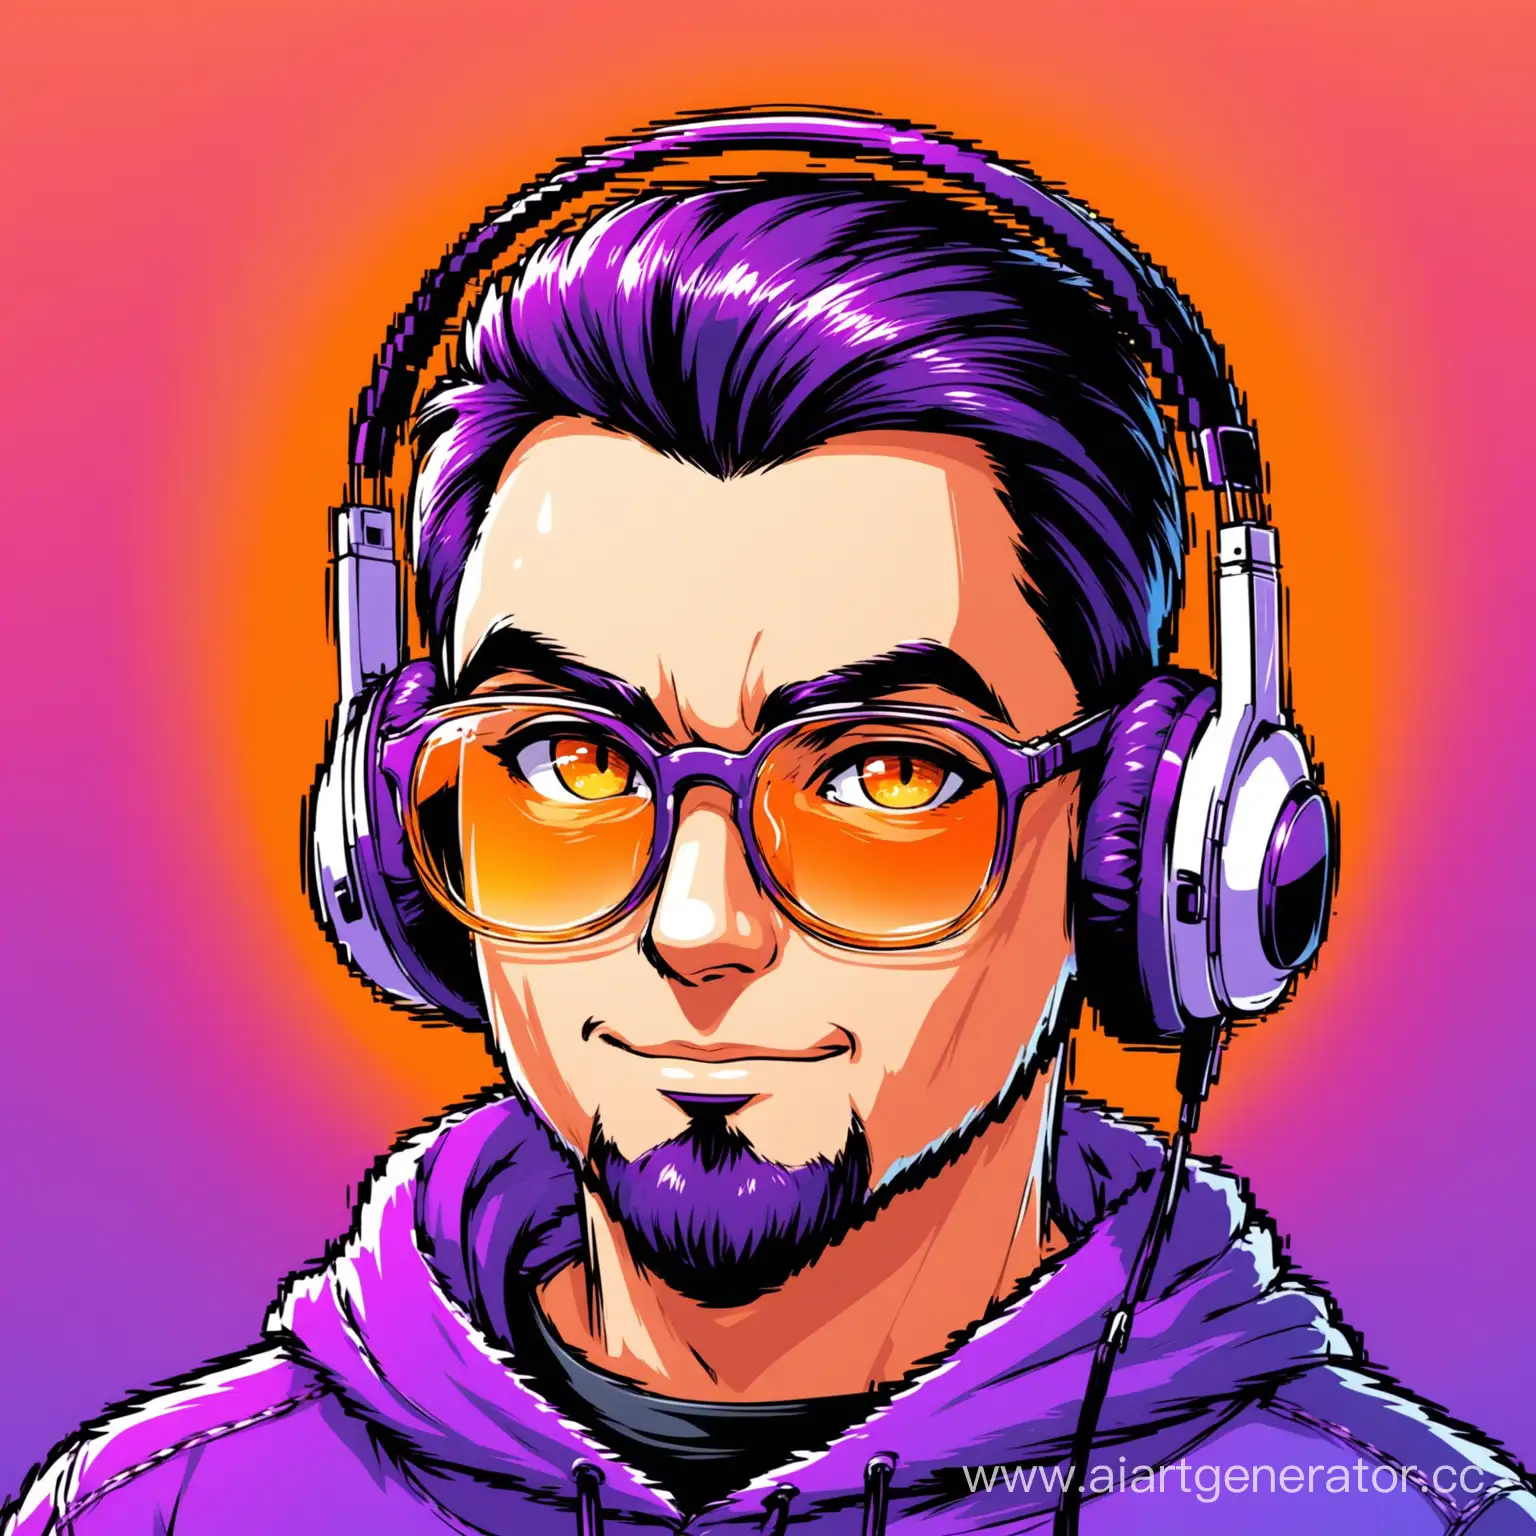 Man-Cartoon-Portrait-with-PurpleOrange-Gradient-Glasses-and-Headphones